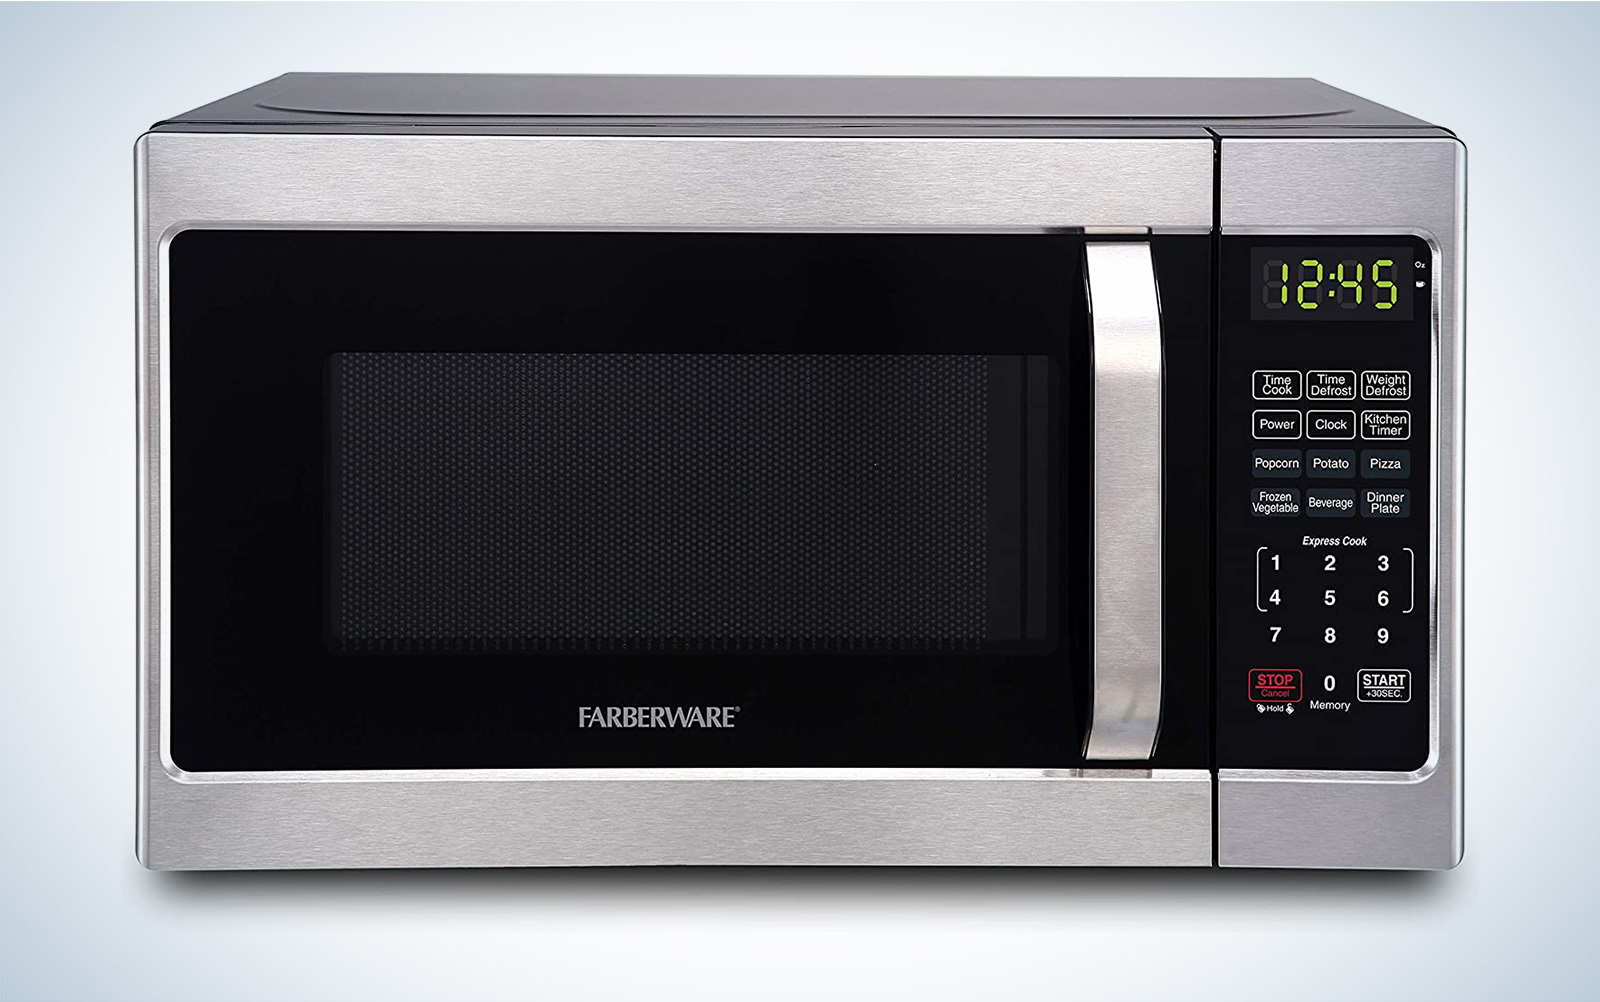 https://www.popsci.com/uploads/2023/03/13/best-countertop-microwaves-farberware-classic-microwave-oven.jpg?auto=webp&width=800&crop=16:10,offset-x50